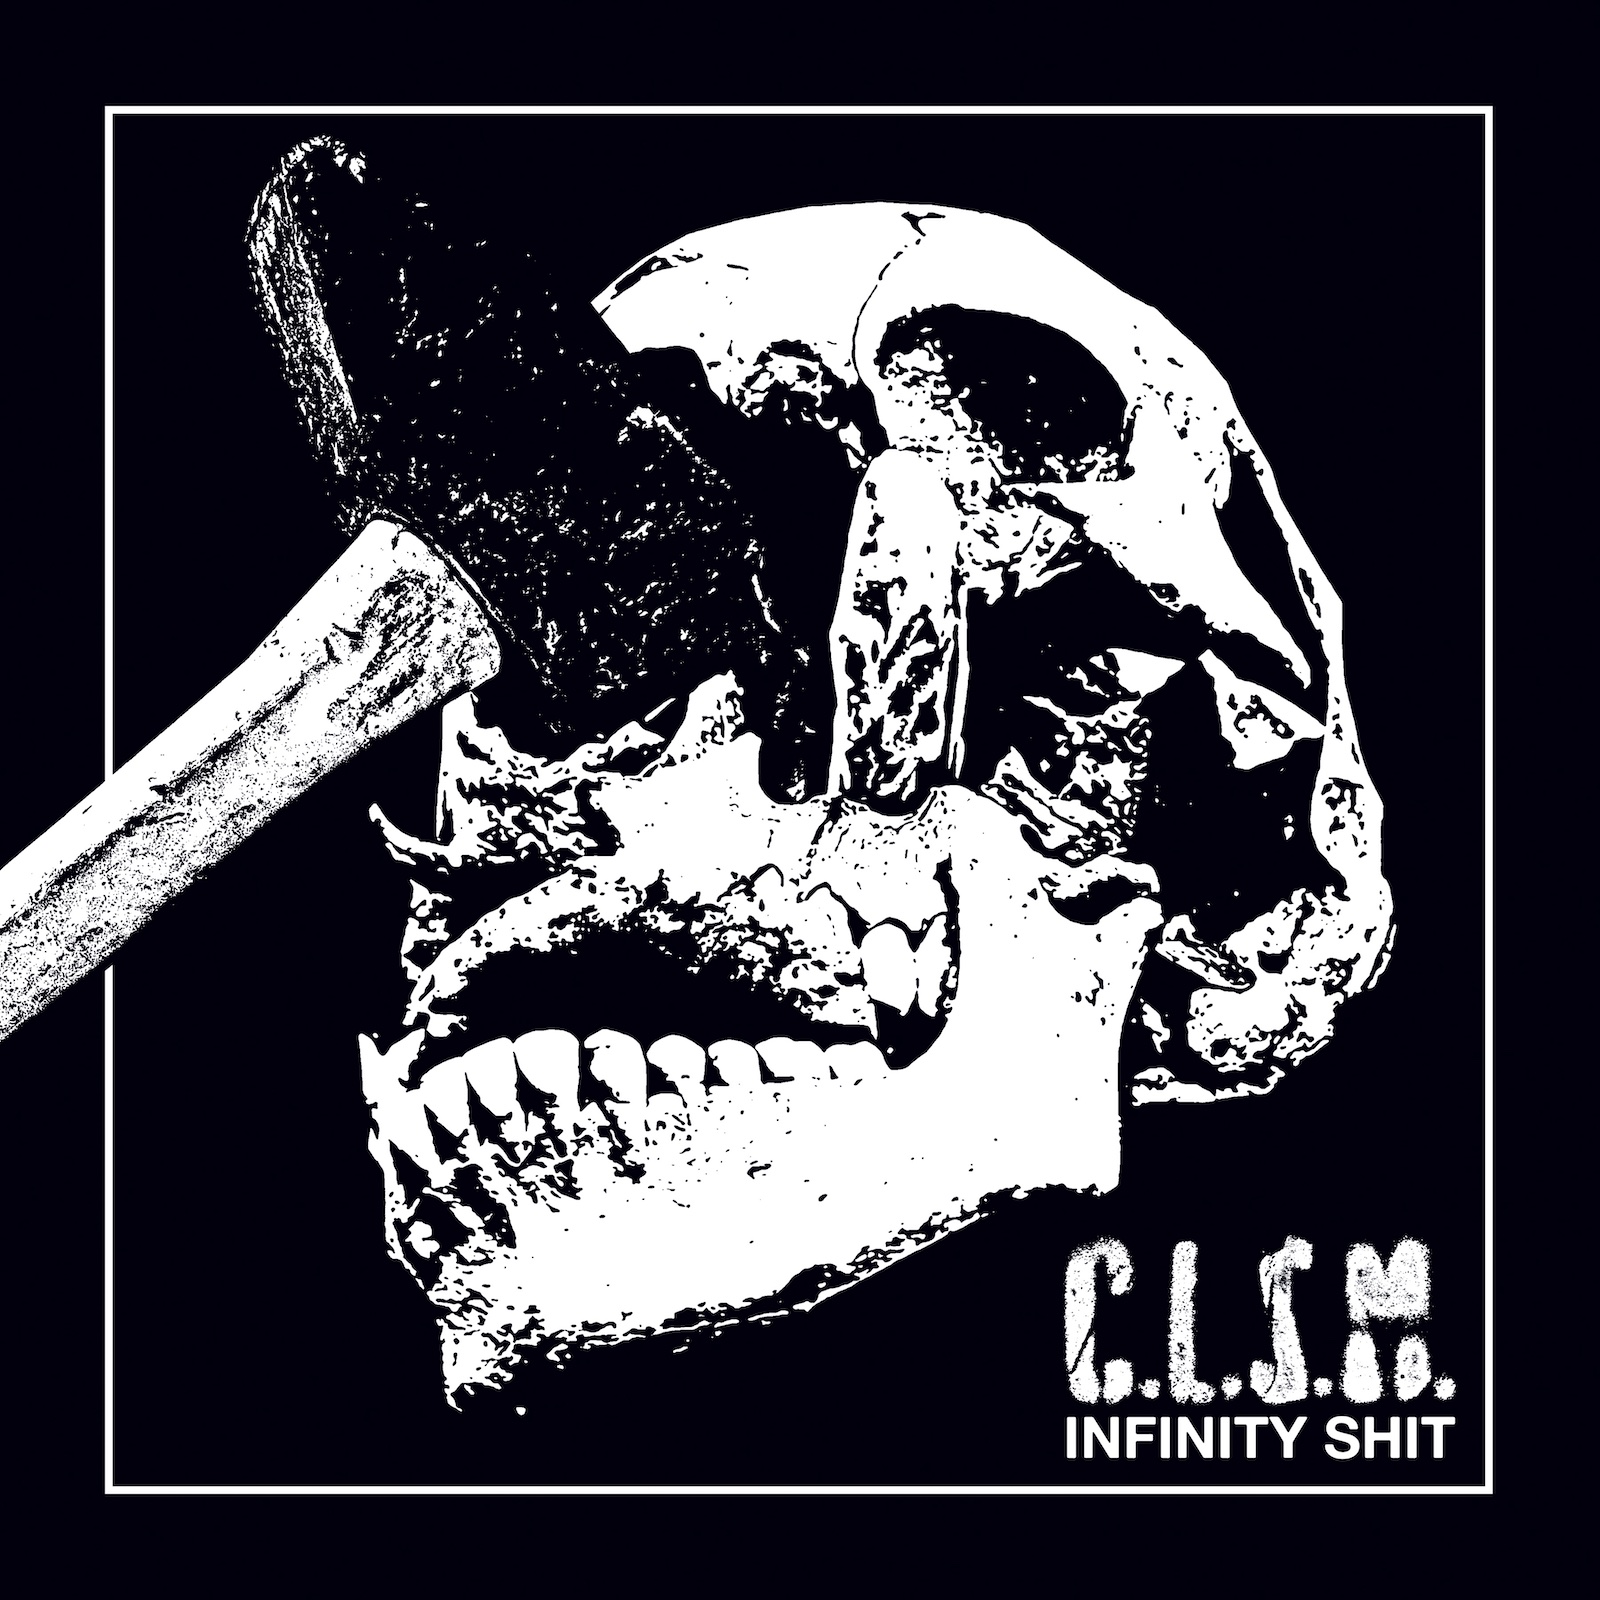 CLSM Infinity Shit